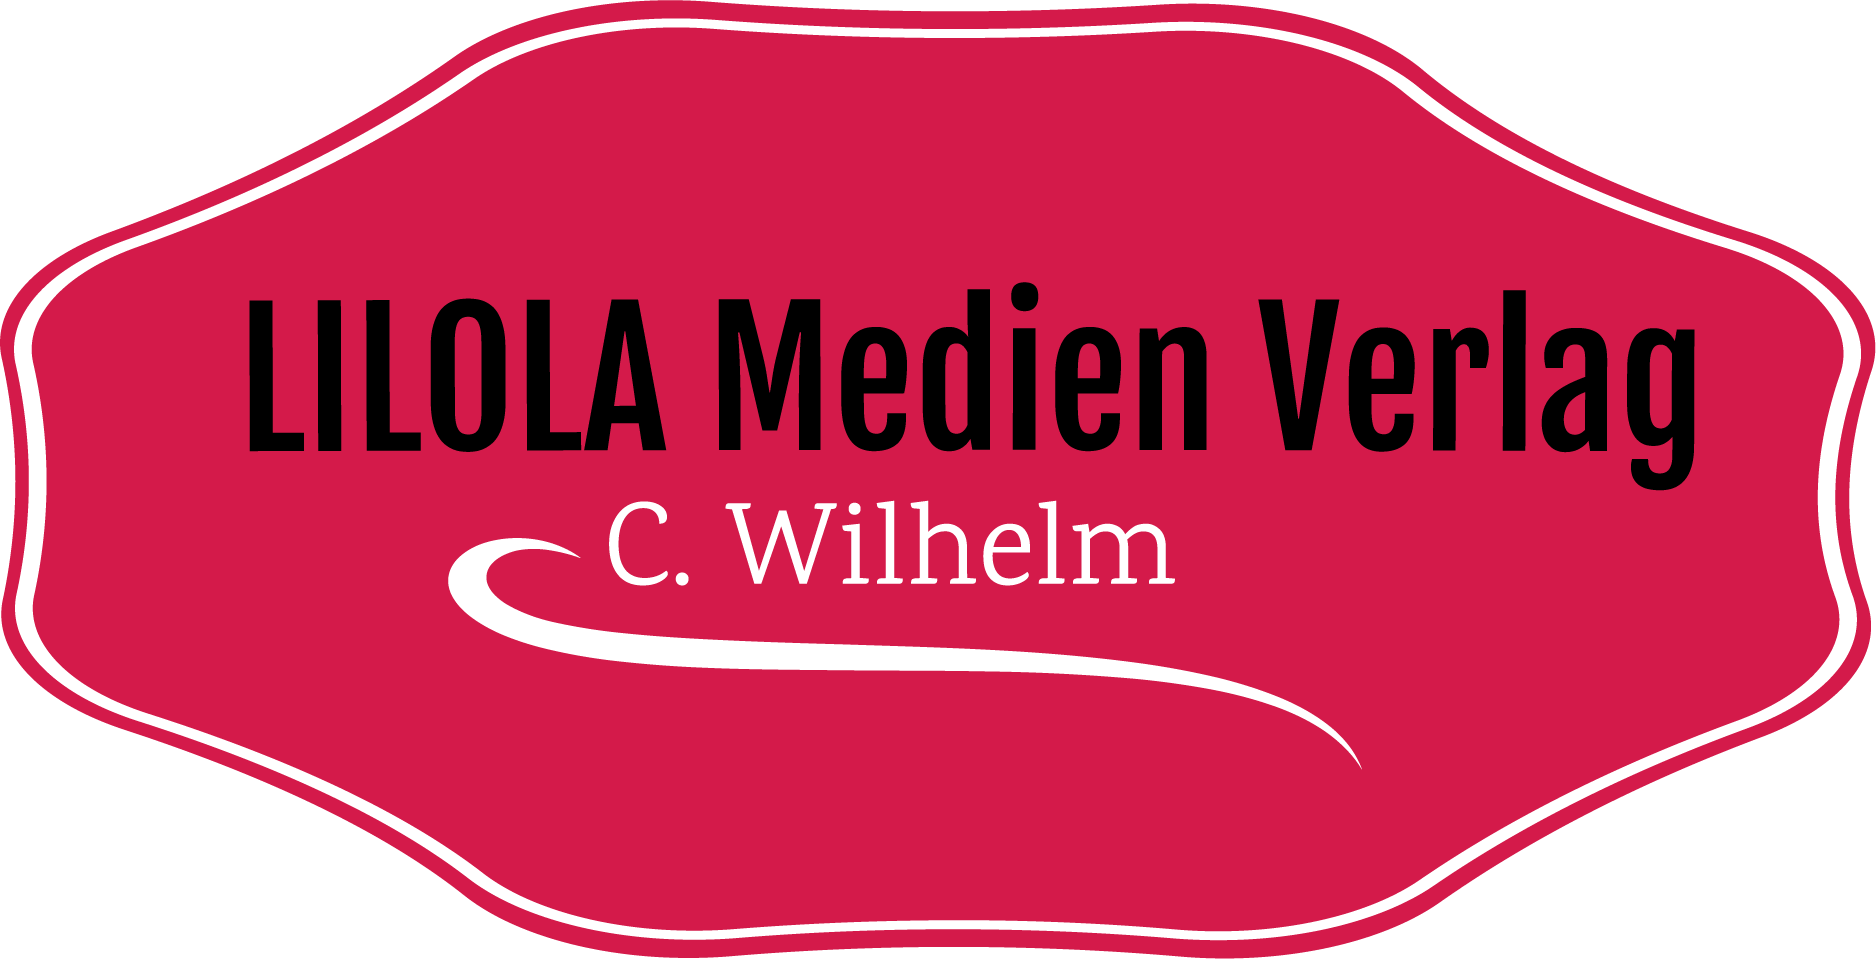 Lilola-Medienverlag/ C.Wilhelm